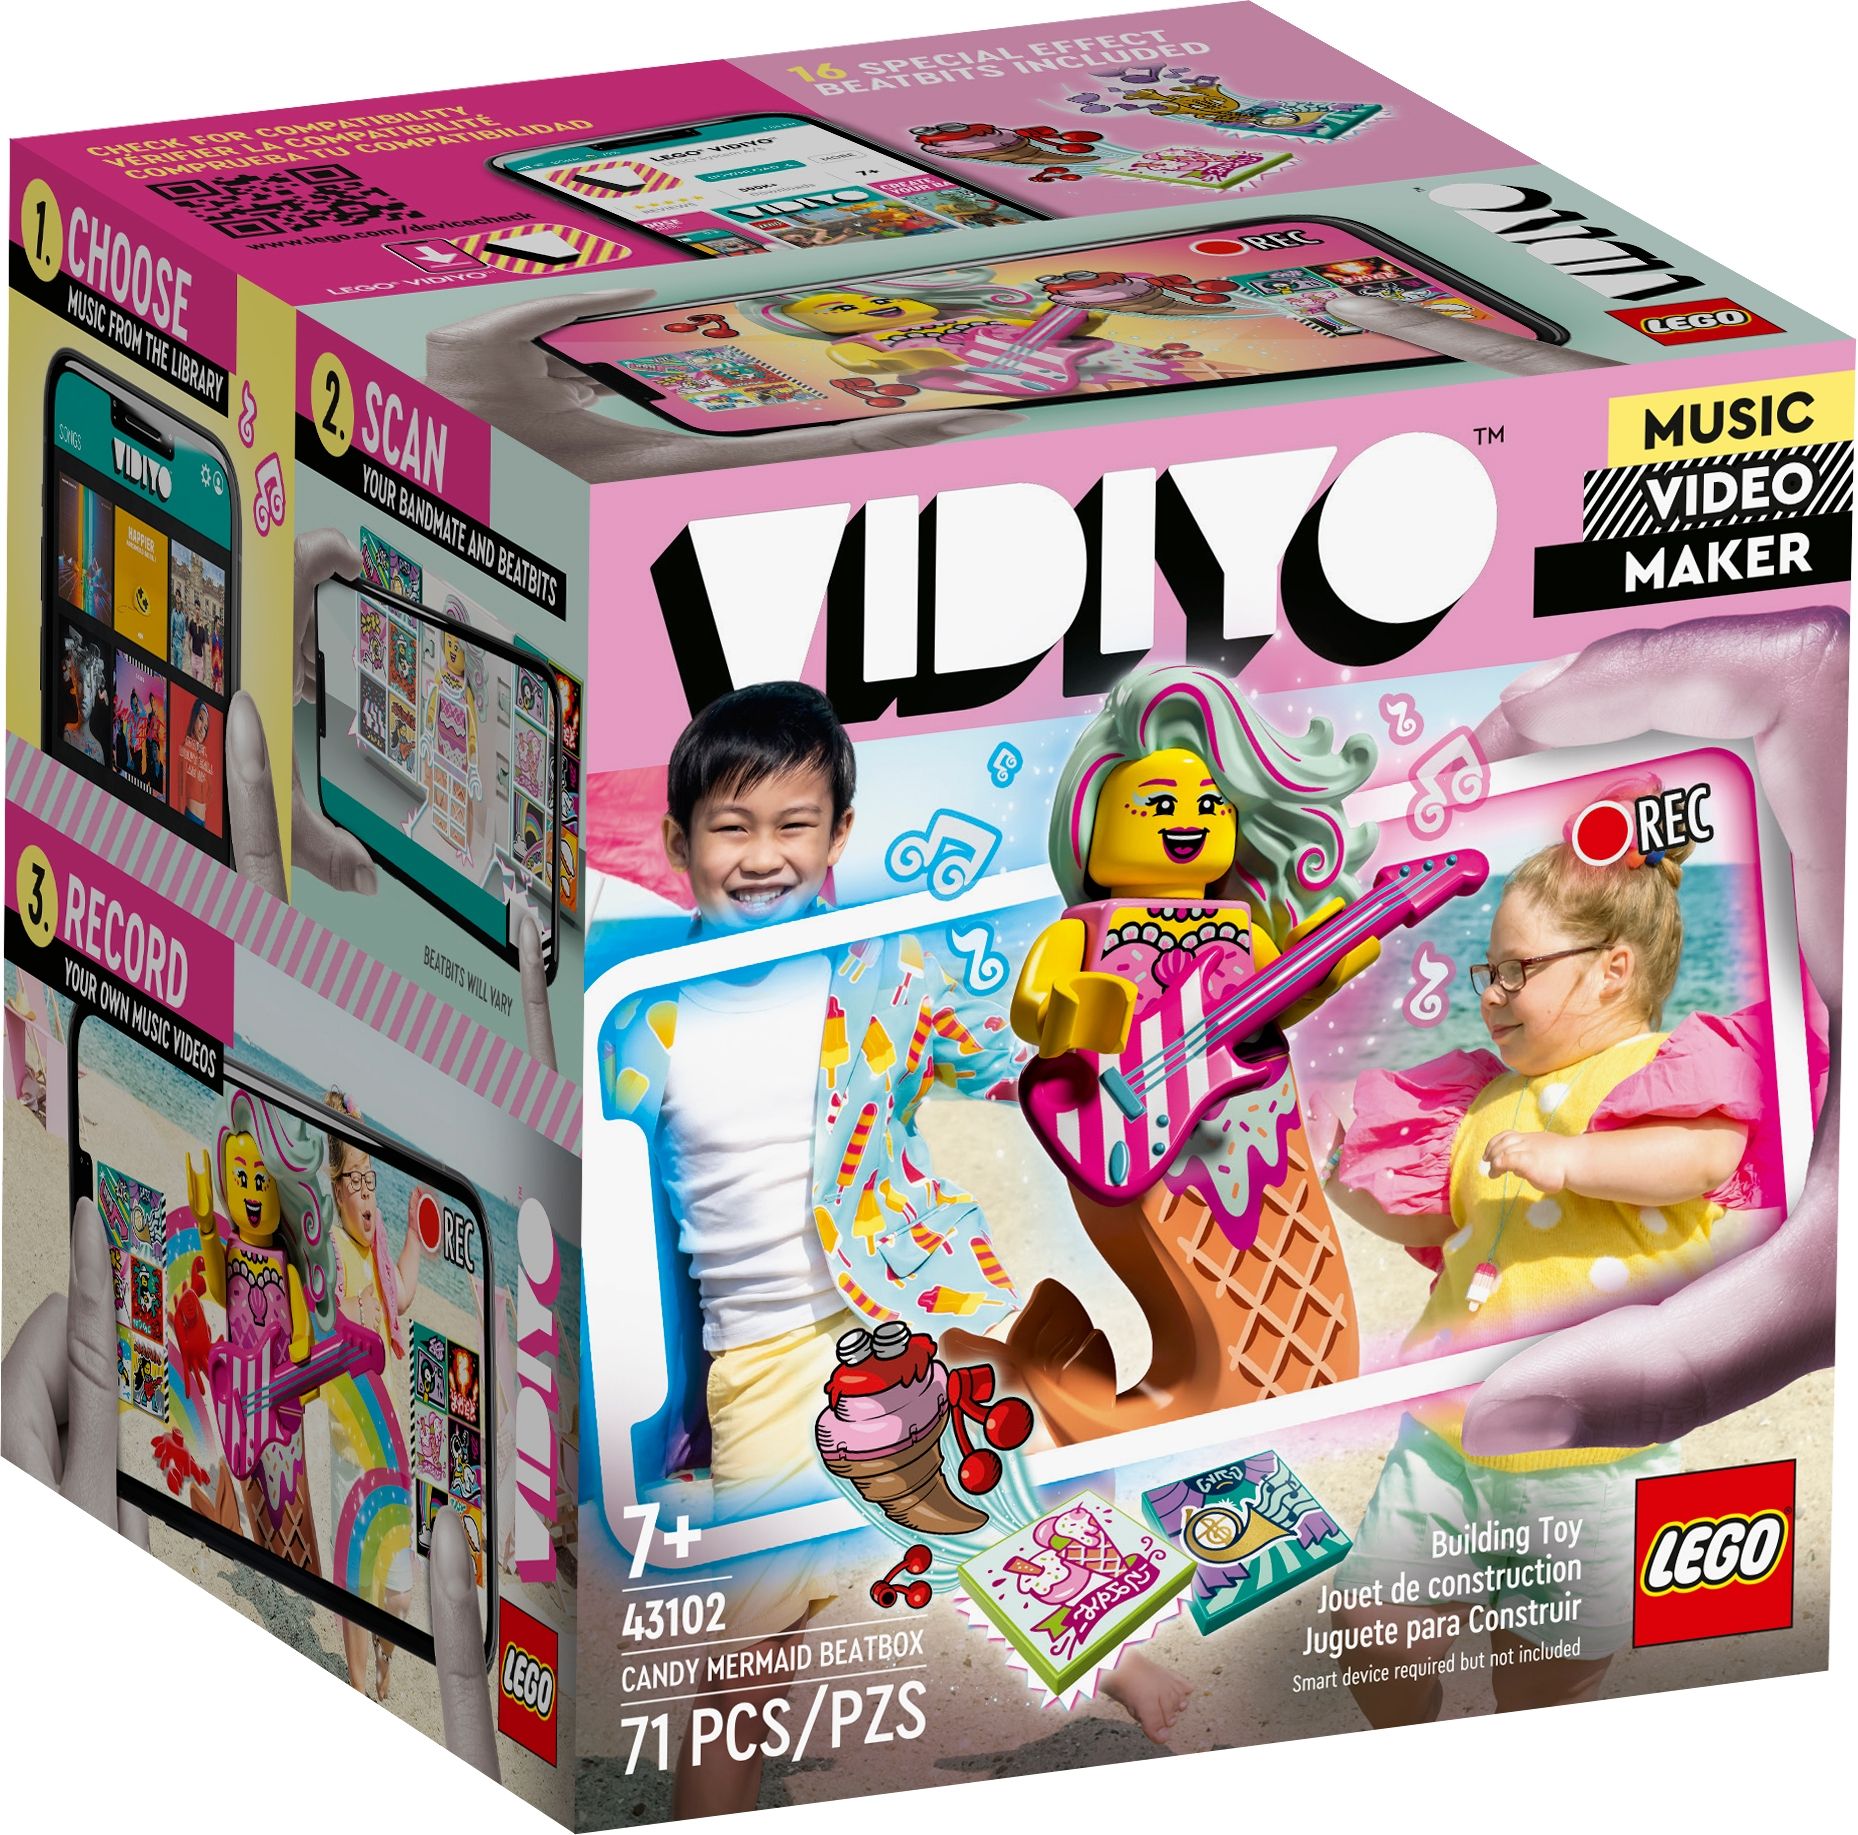 LEGO Vidiyo 43102 Candy Mermaid BeatBox LEGO_43102_box1_v39.jpg